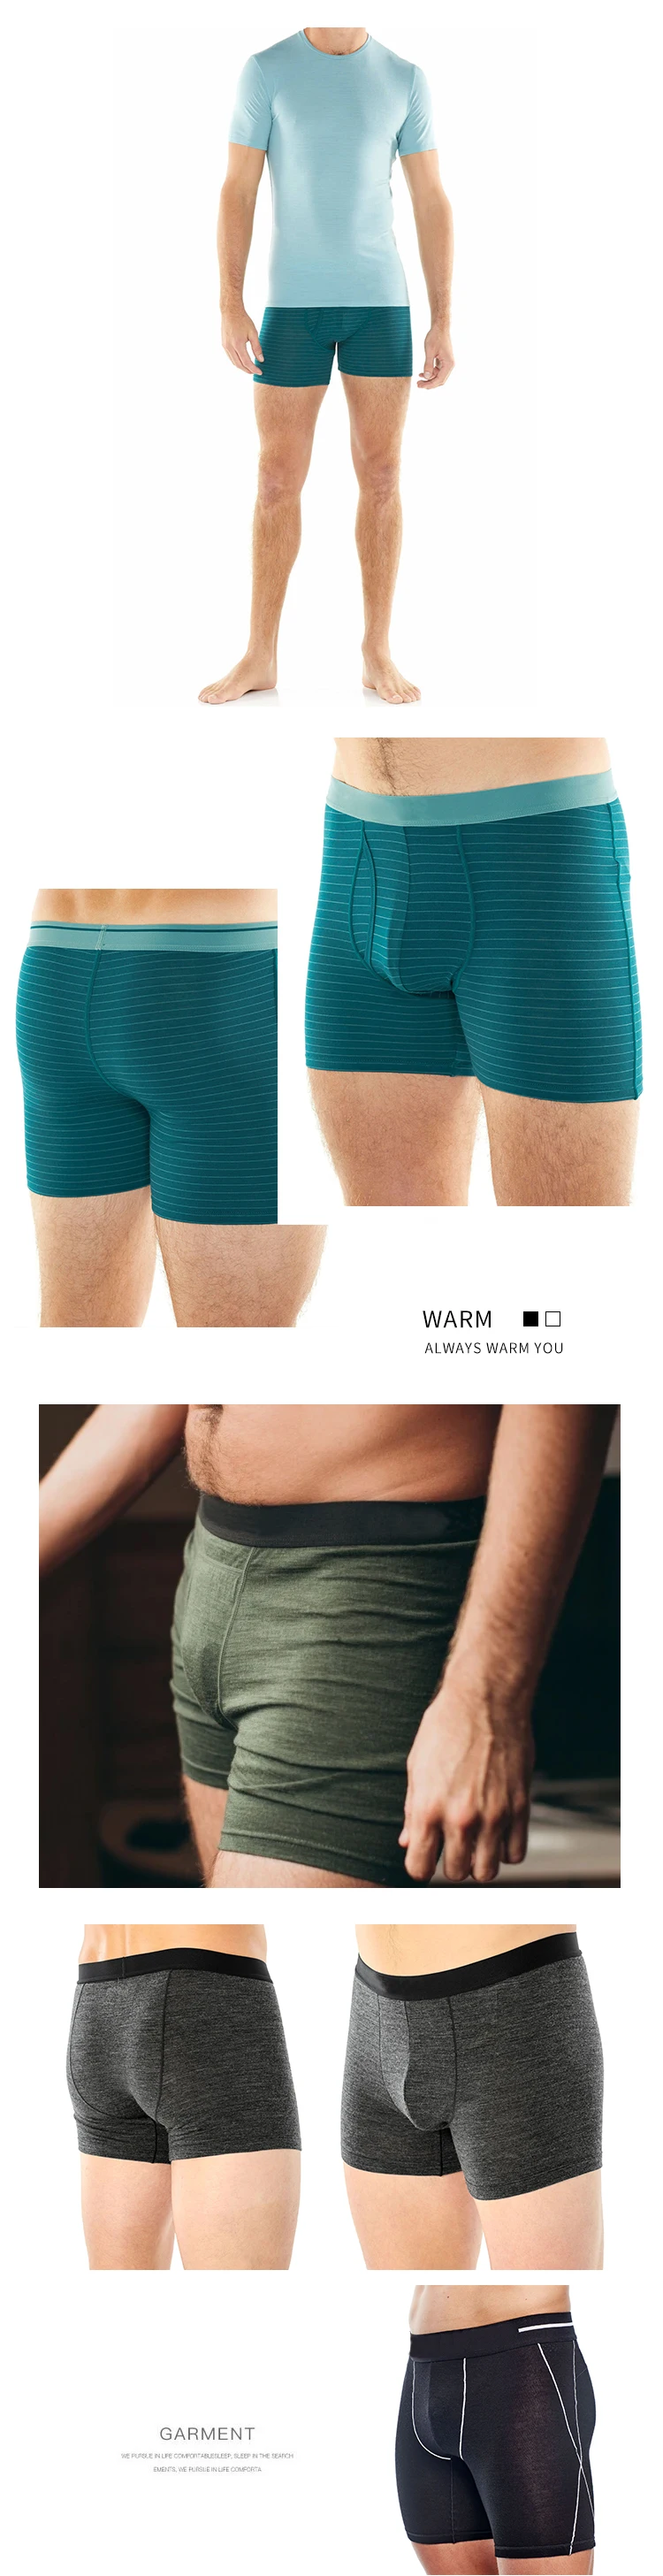 mens Merino Wool long 7 inch compression shorts